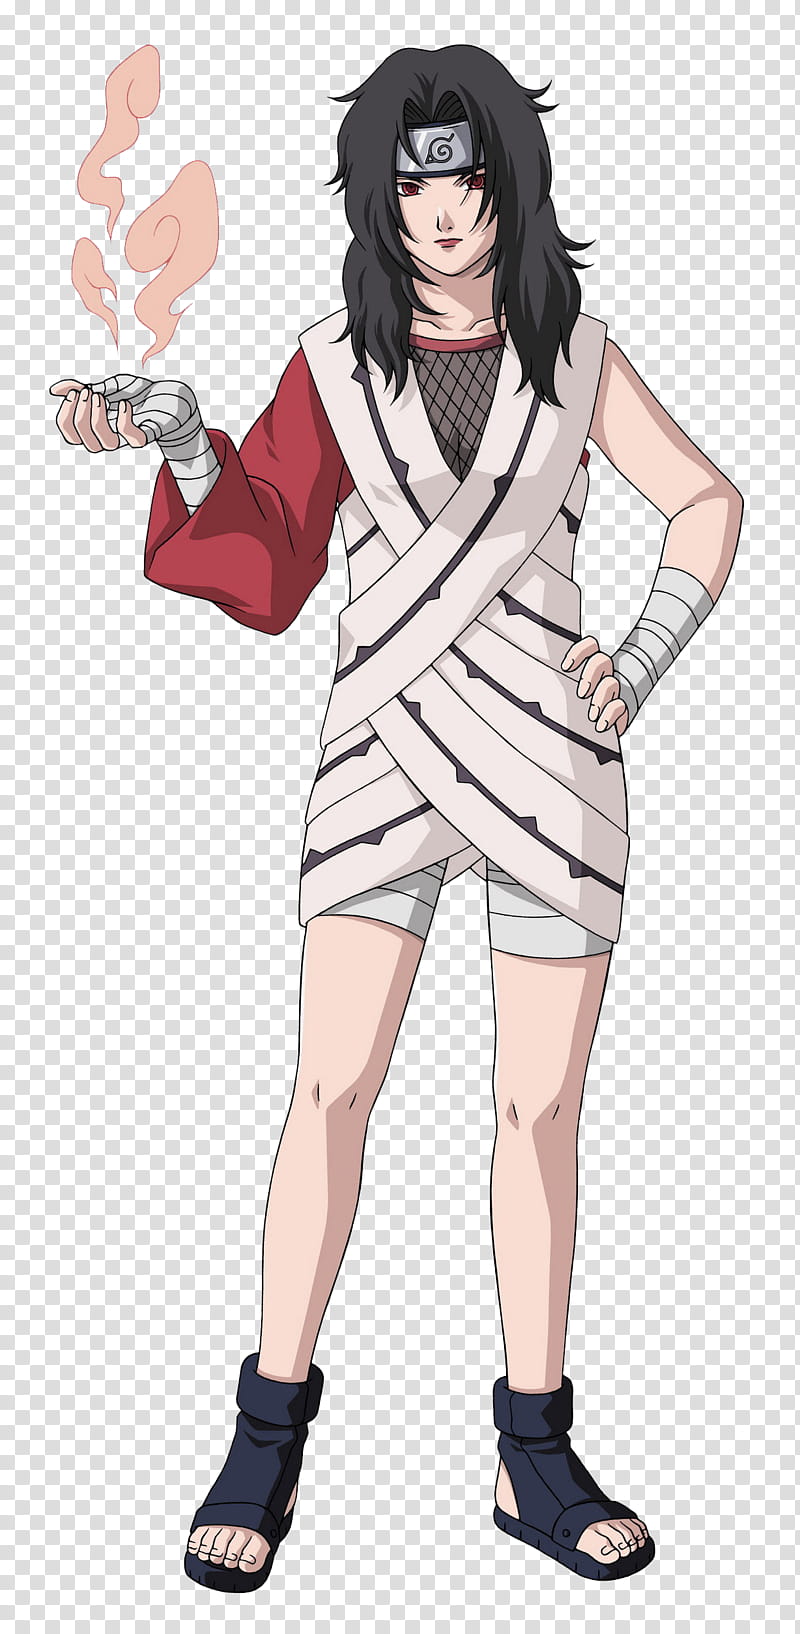 Kurenai II, Naruto Shippuden female character illustration transparent background PNG clipart